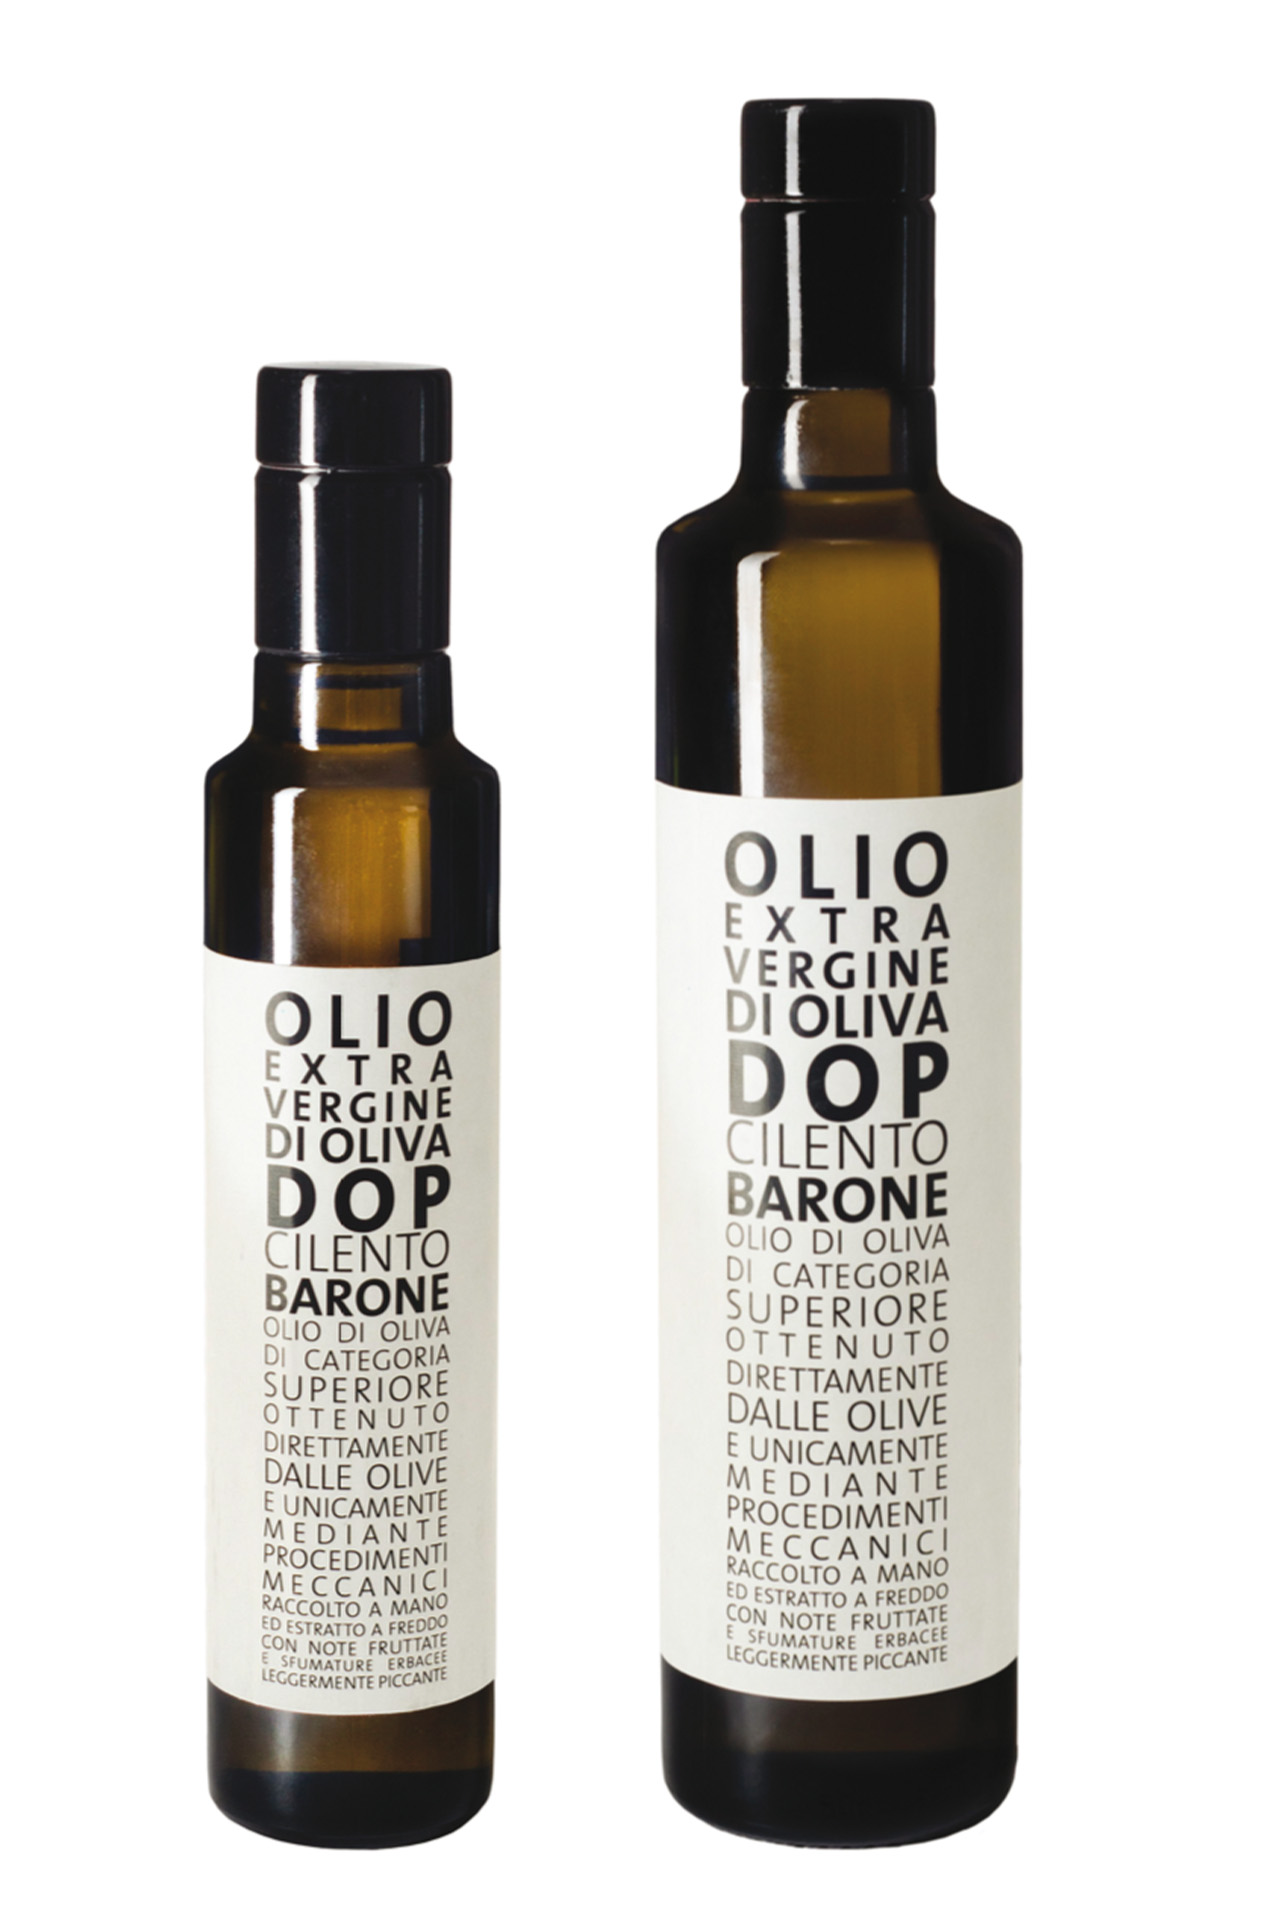 Olio Extravergine di oliva DOP “Cilento”